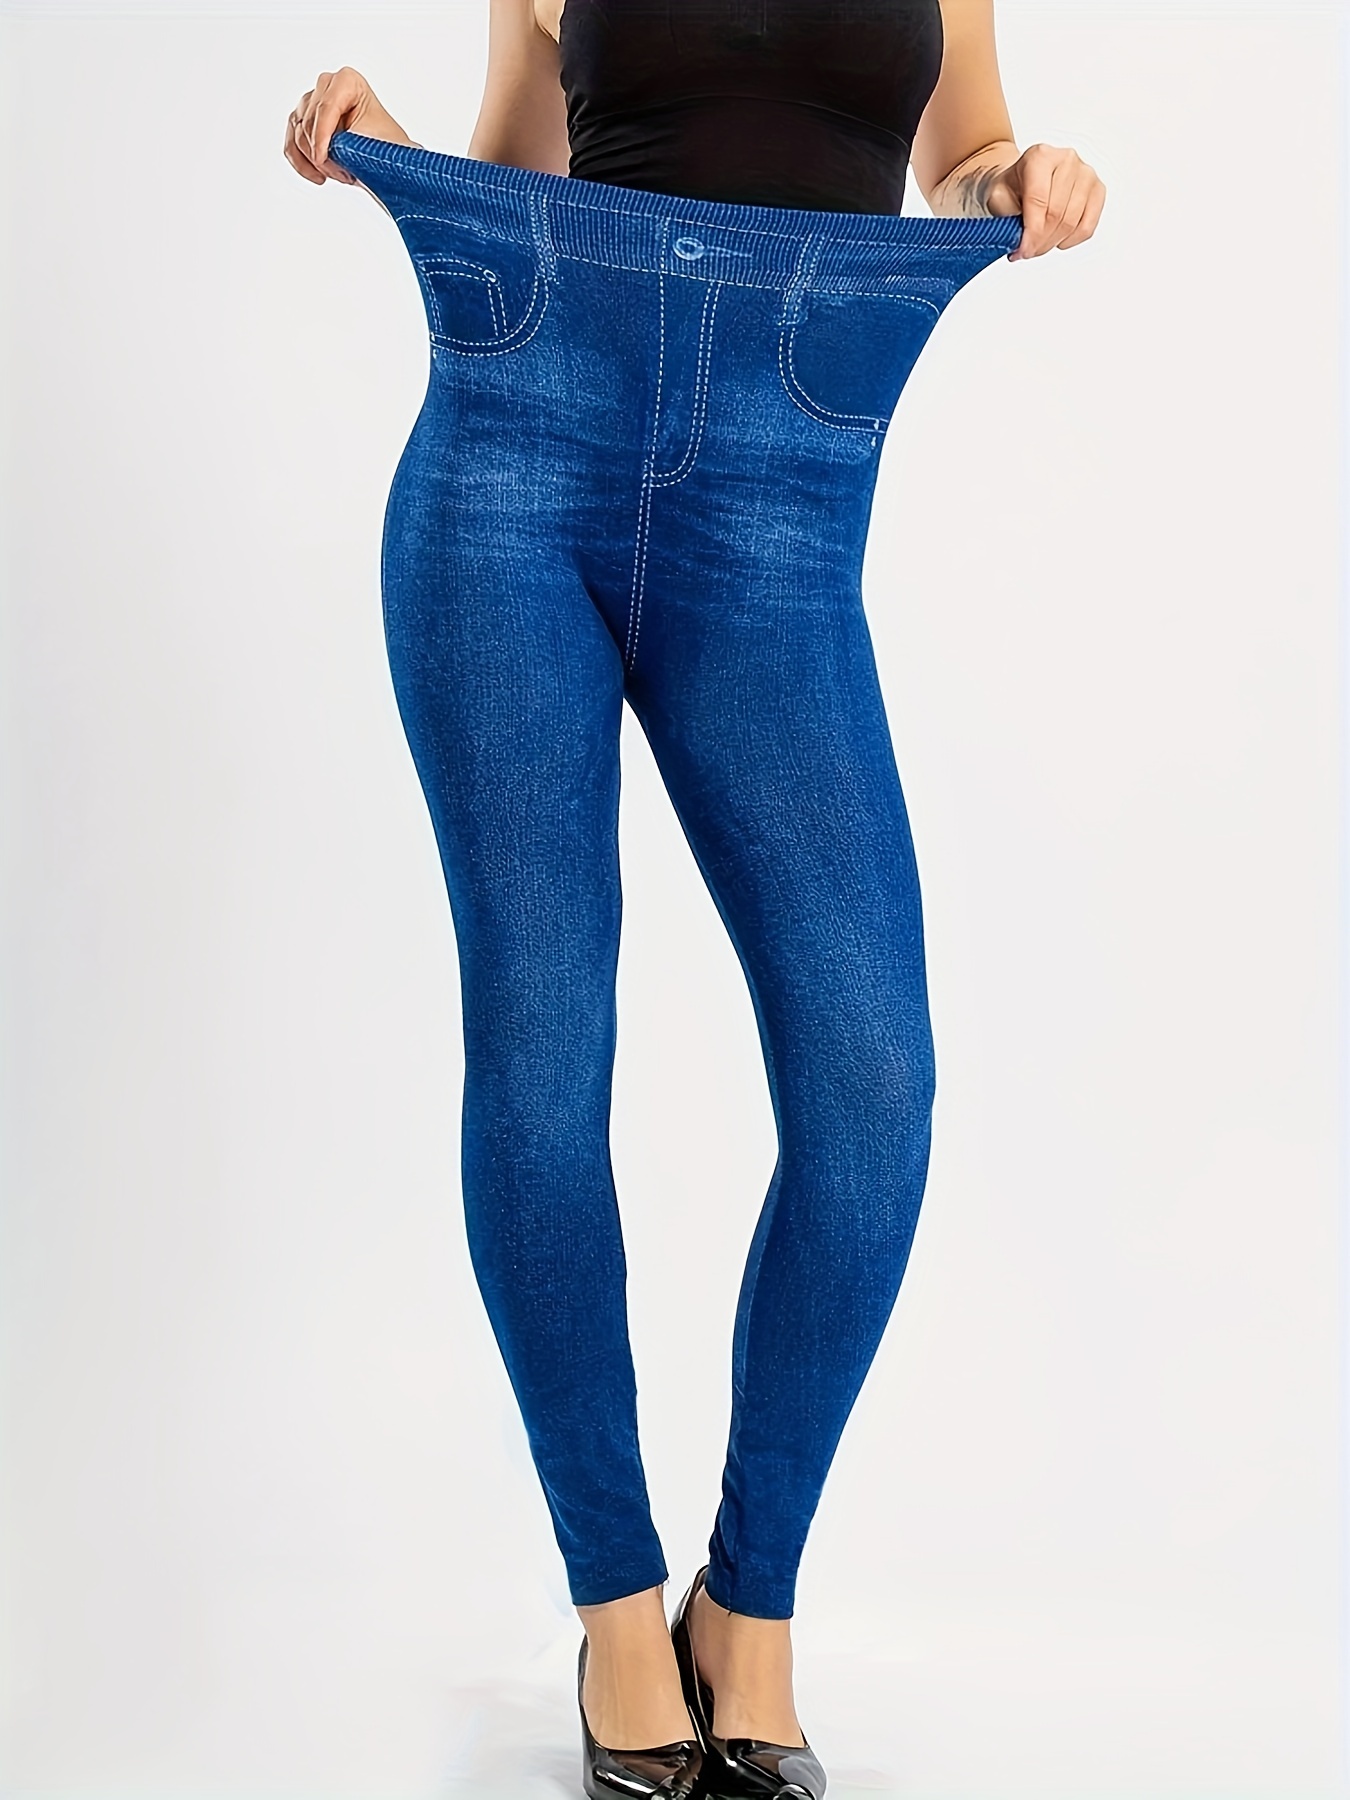 Reduce Price Hfyihgf Jeggings for Women Looking Denim Print Seamless  Elastic High Waisted Yoga Leggings Skinny Stretch Distressed Pants(Blue,M)